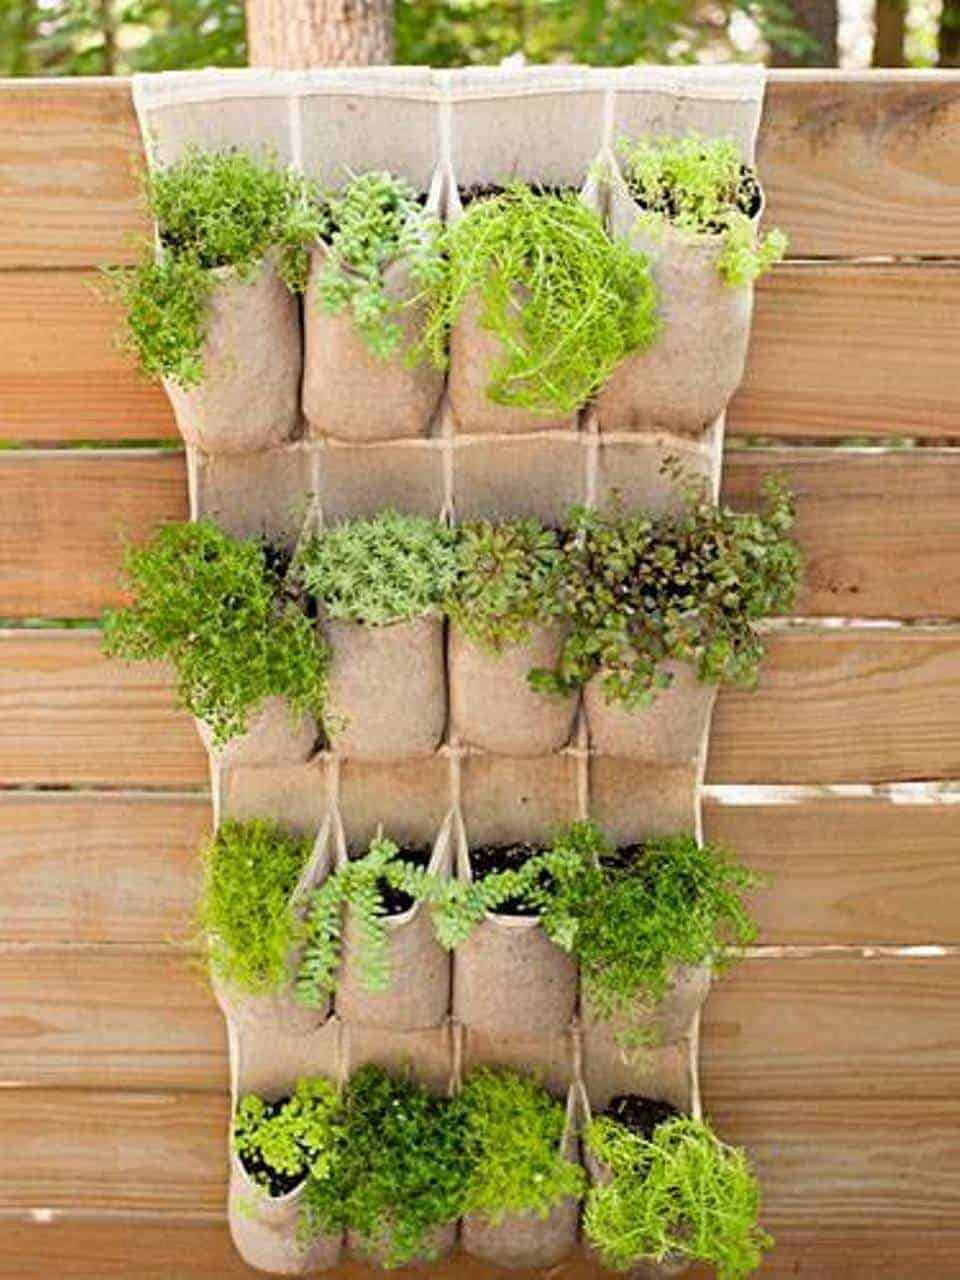 ost Attractive Small Garden Ideas